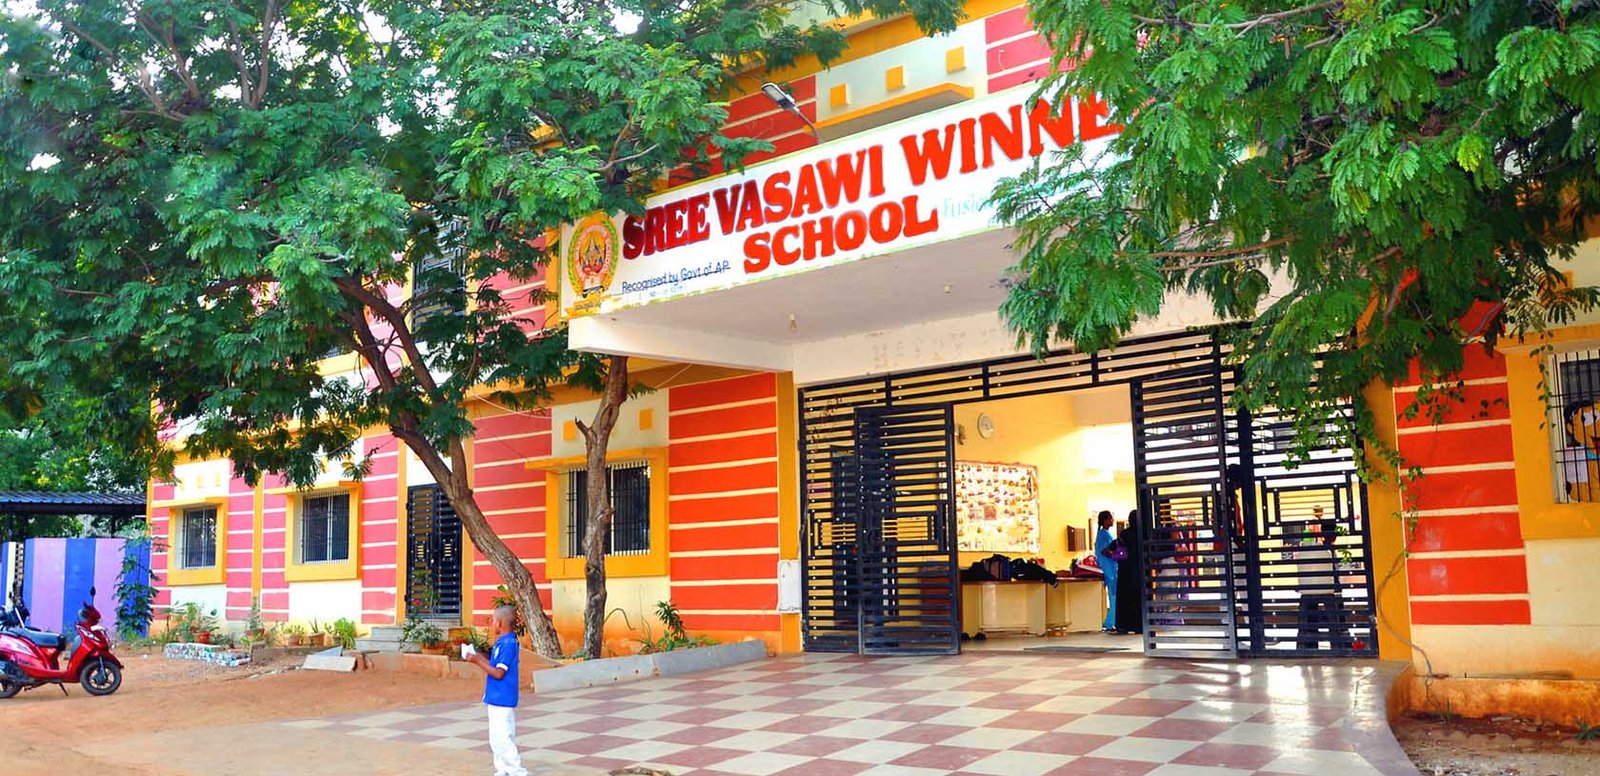 The Landmark School Bangalore